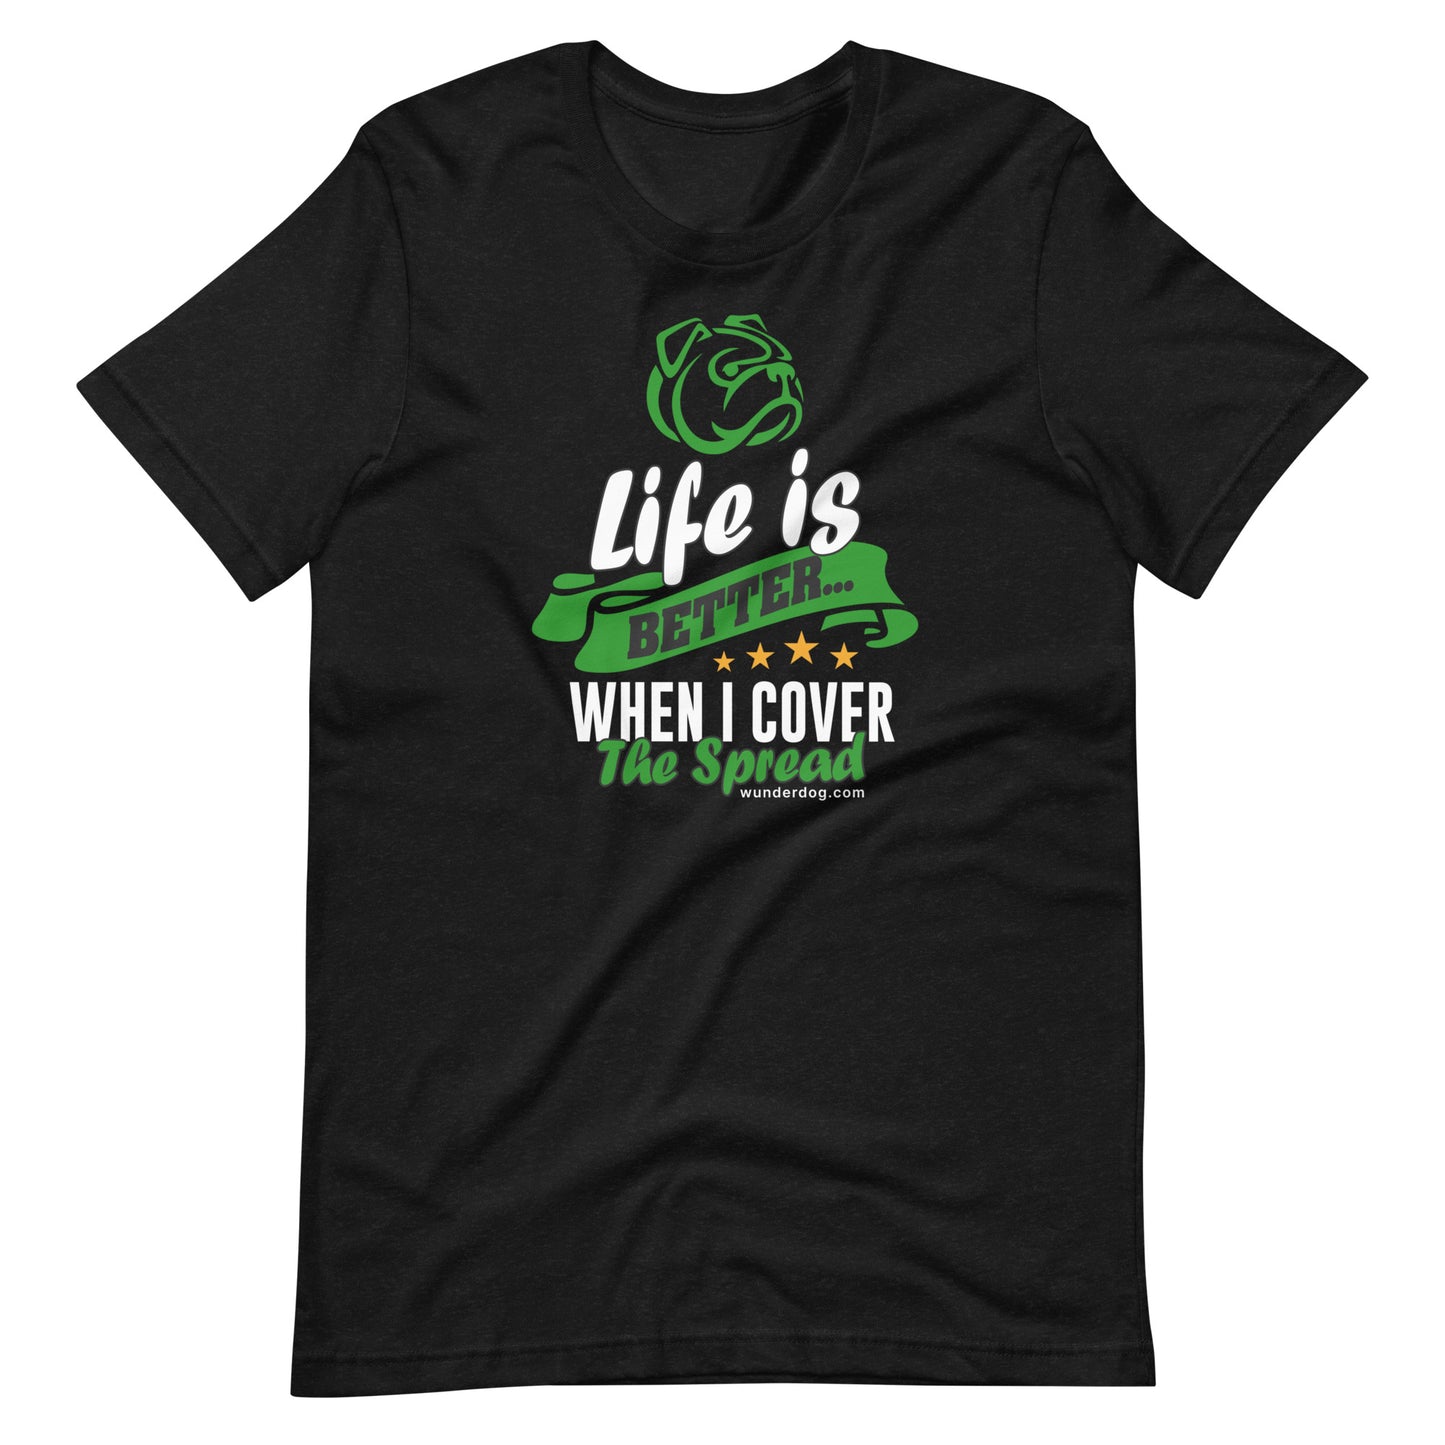 Life is Better Unisex T-Shirt